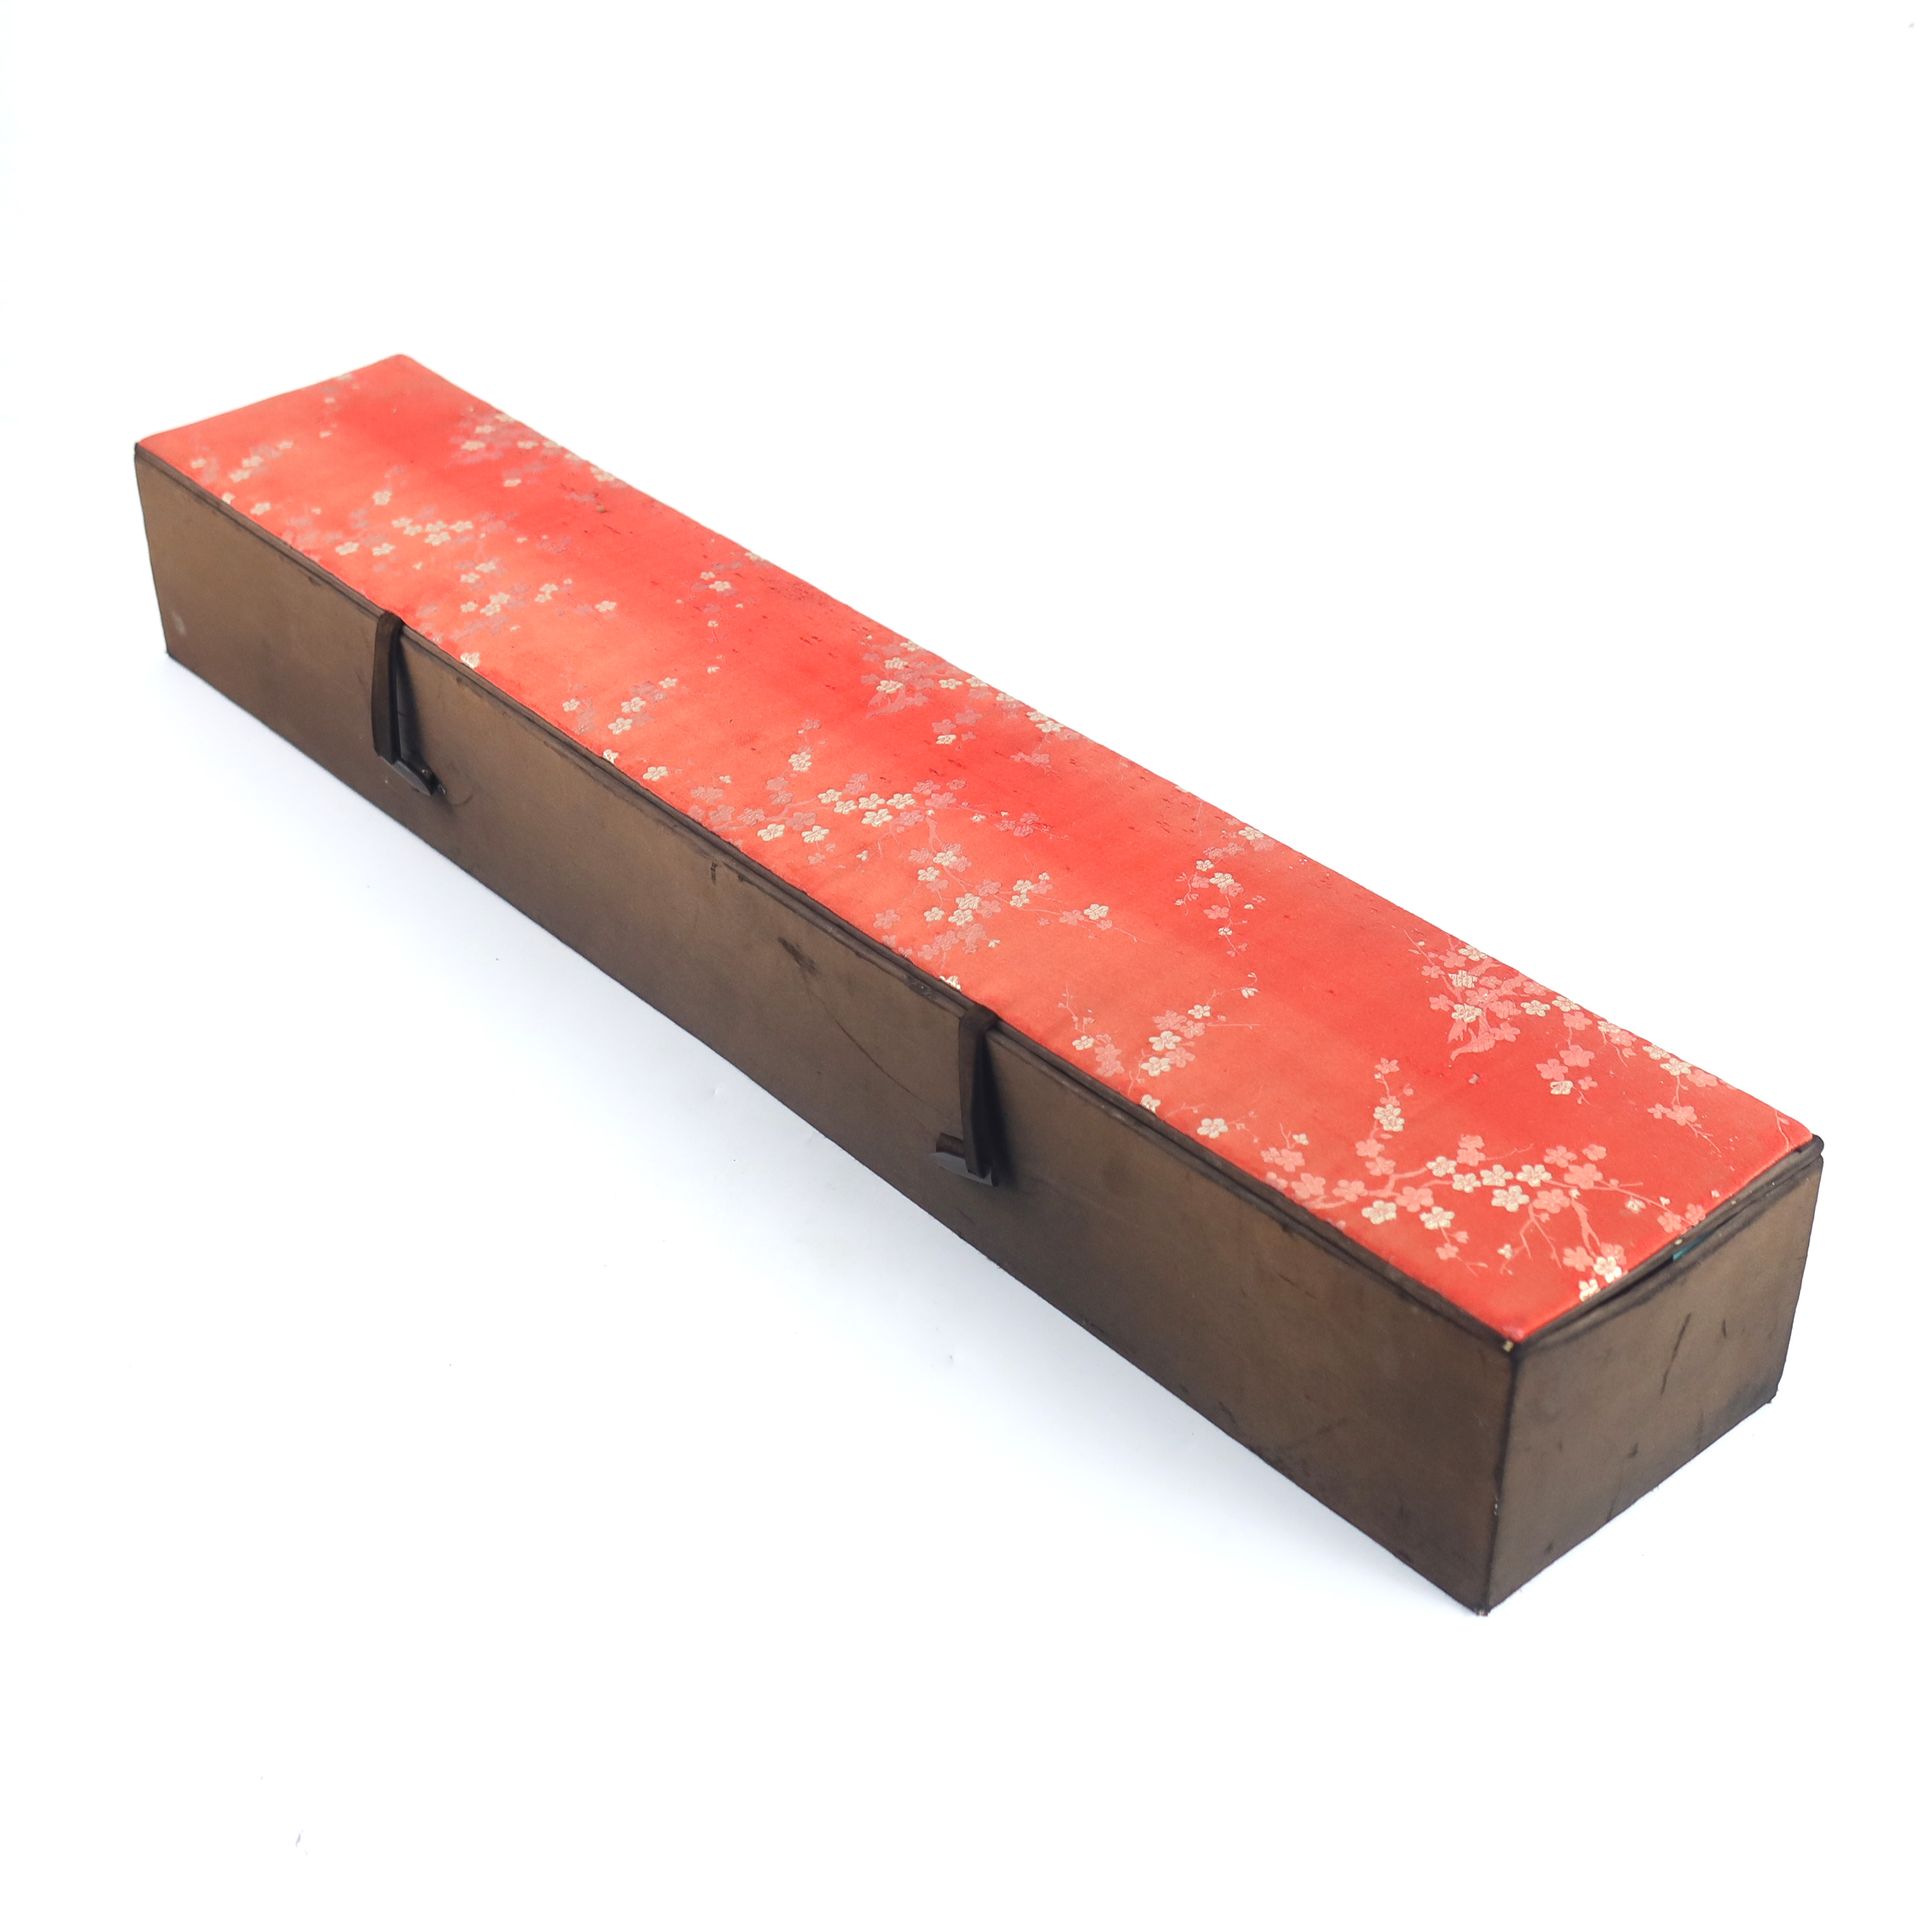 Null 一个大的长方形盒子，盖子上覆盖着红色的中国丝织品，内衬是明亮的绿松石丝，用于存放扇子，可以是多件物品，也可能是一把长羽扇。